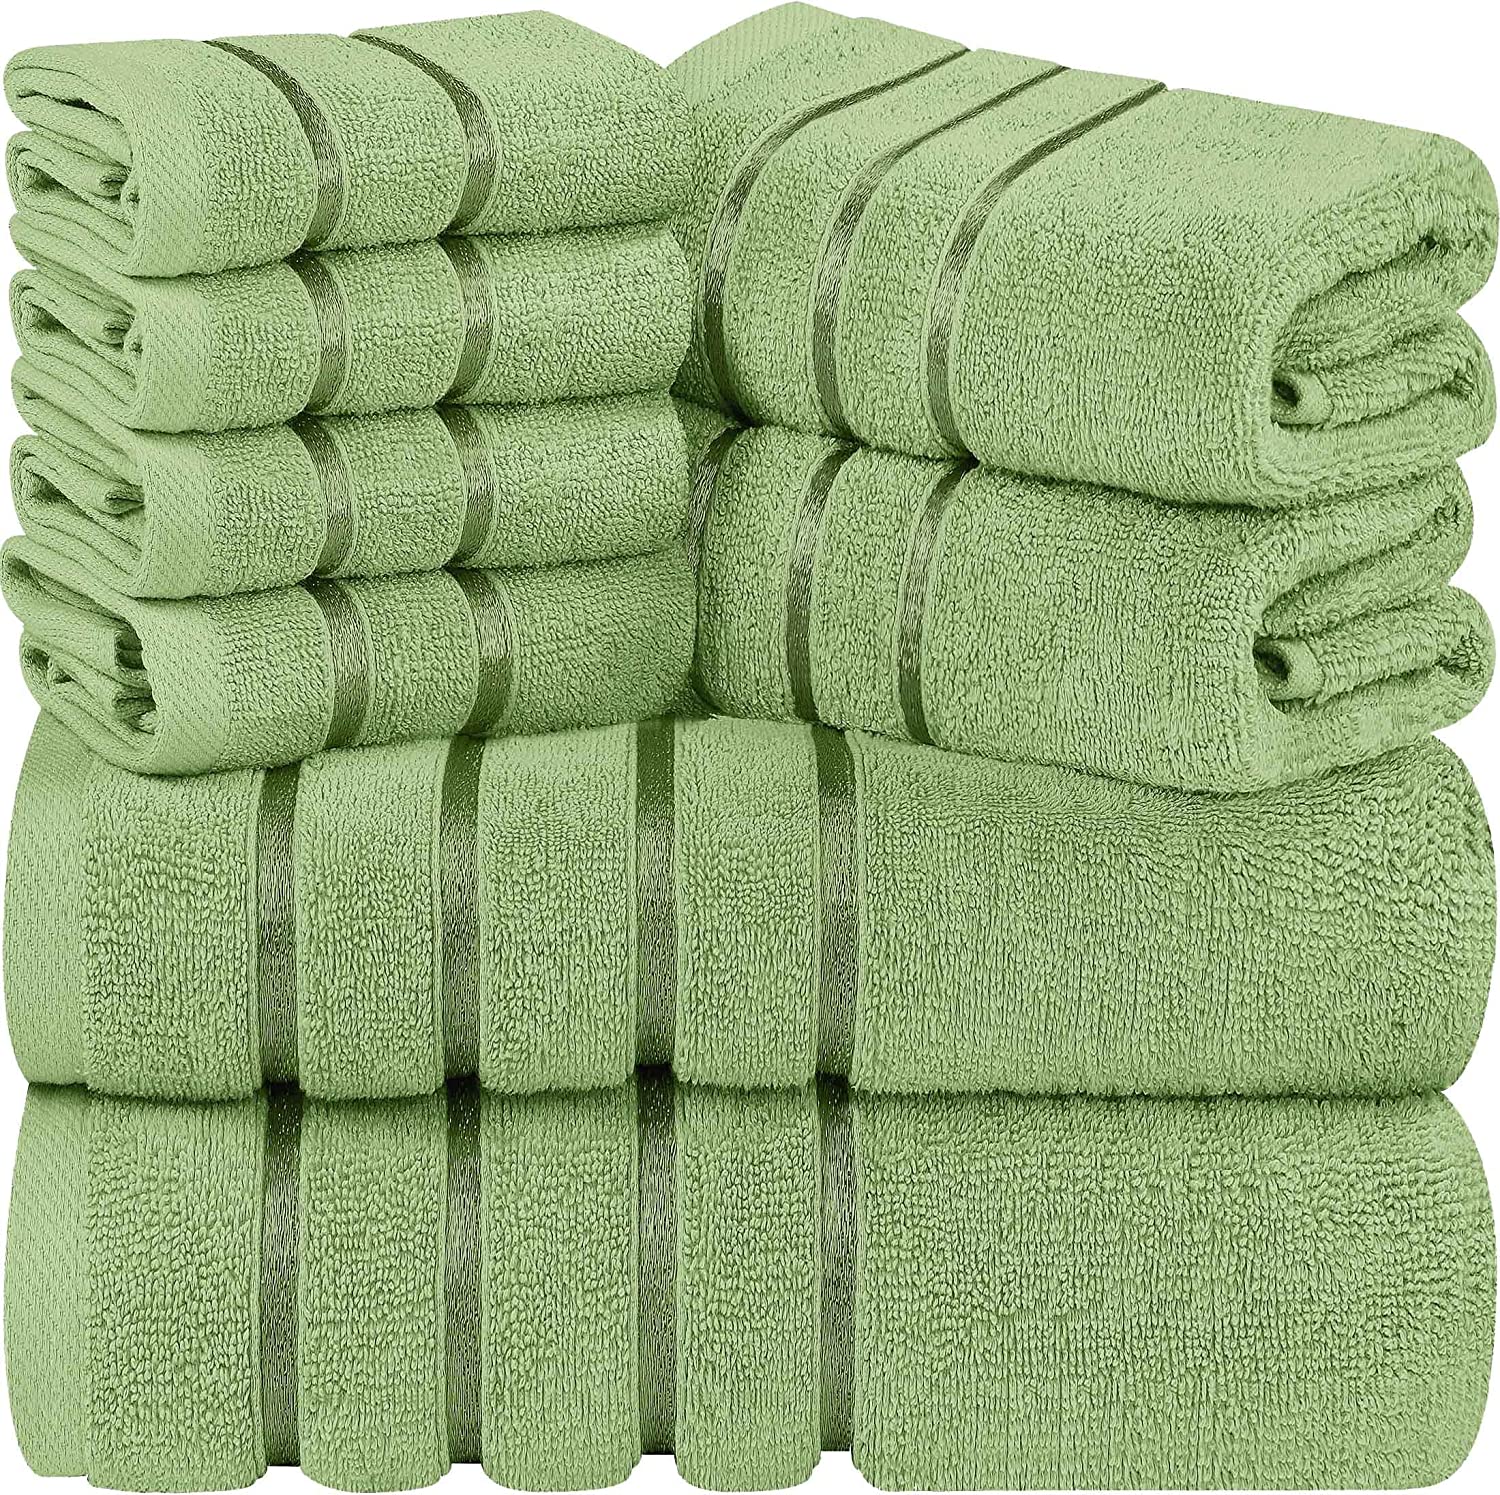 8pc Cotton Bath Towel Set Dark Green